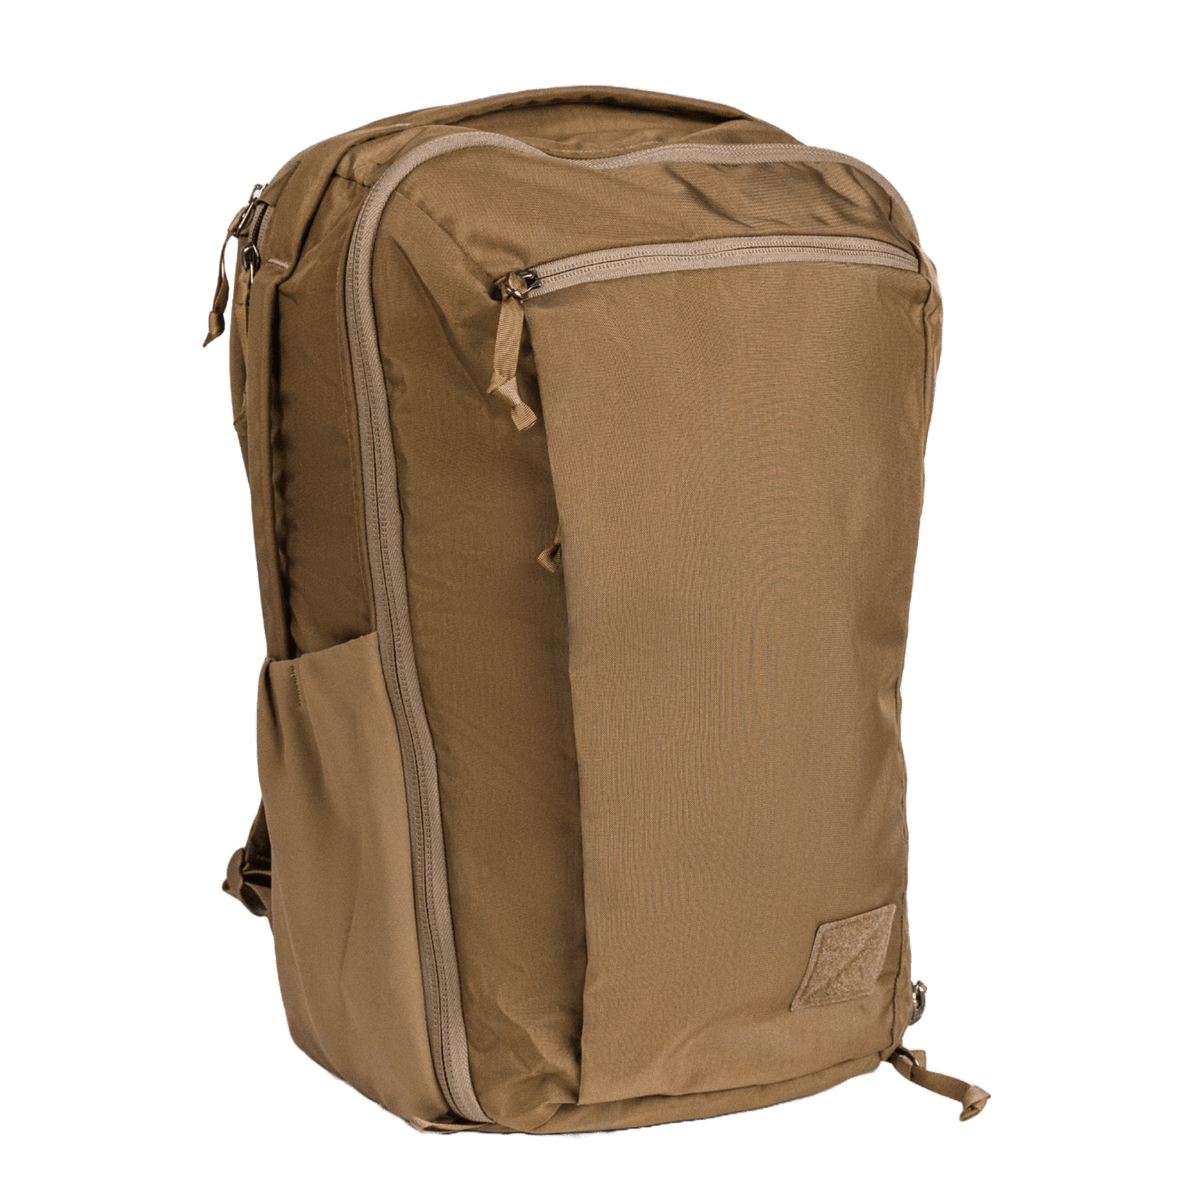 CIVIC Travel Bag 26L - EVERGOODS